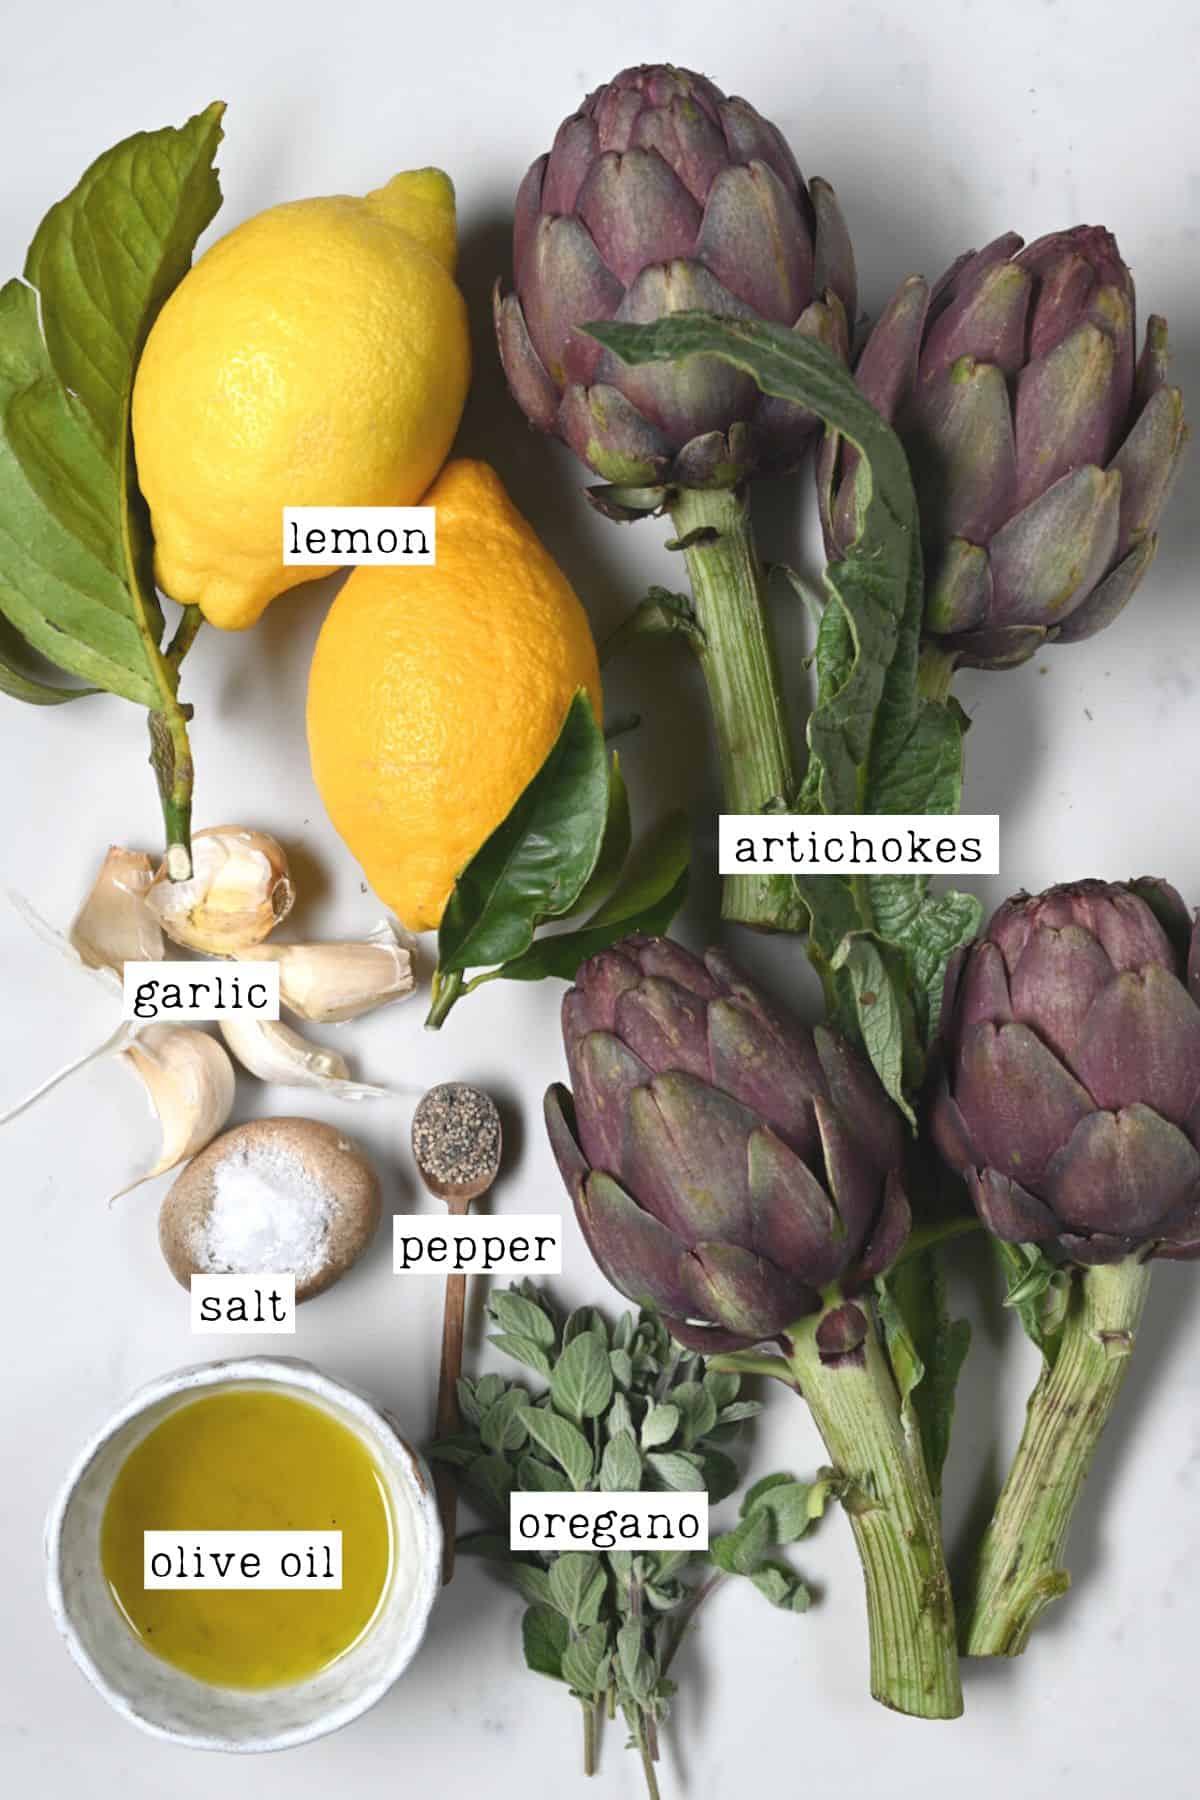 Ingredients for roasted artichoke